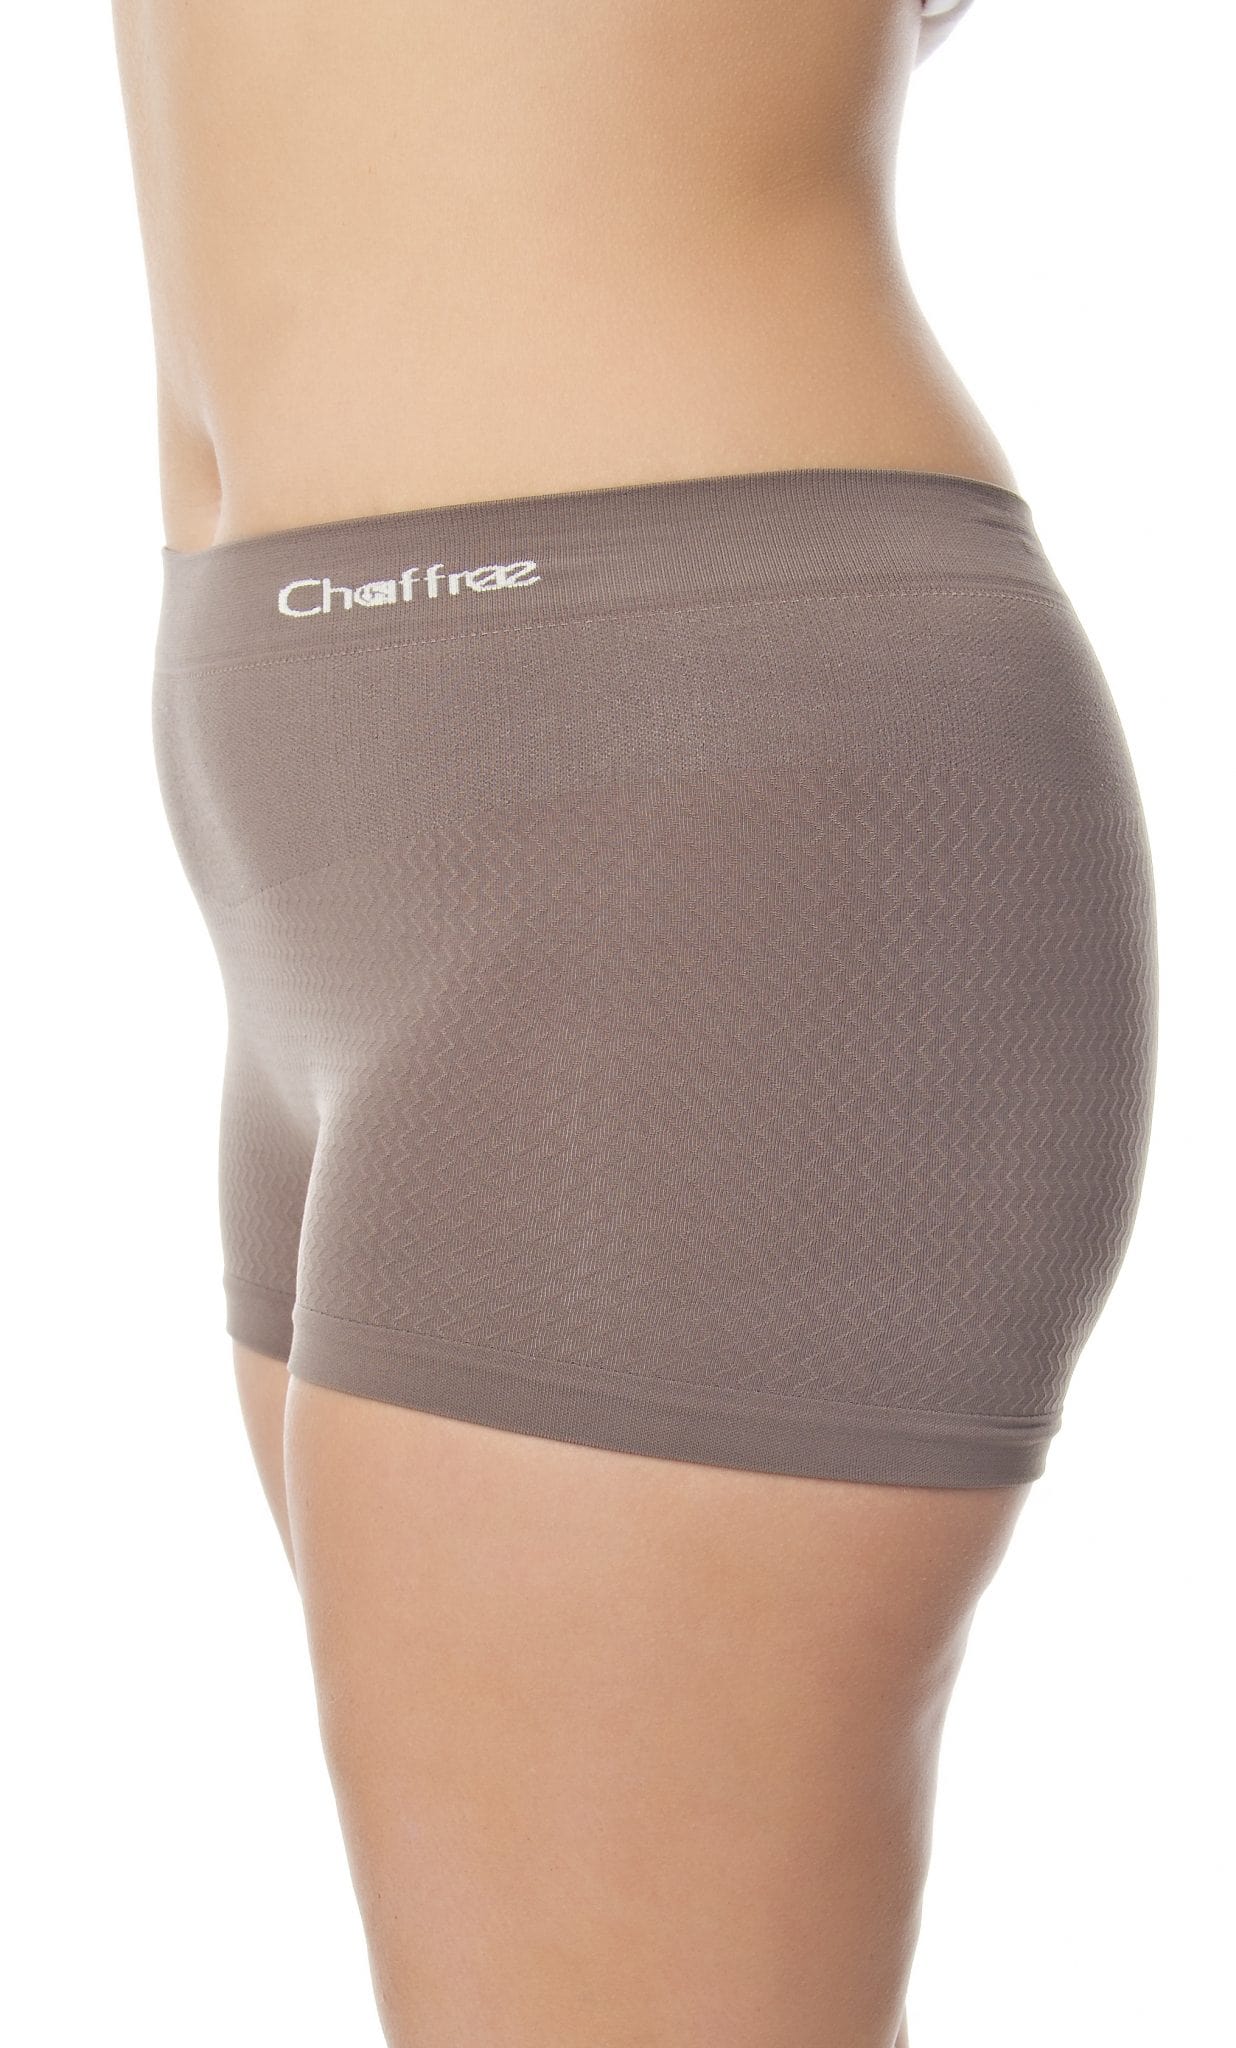 Chaffree Womens Anti Chafing Underwear, Sweat Control 1Pair High